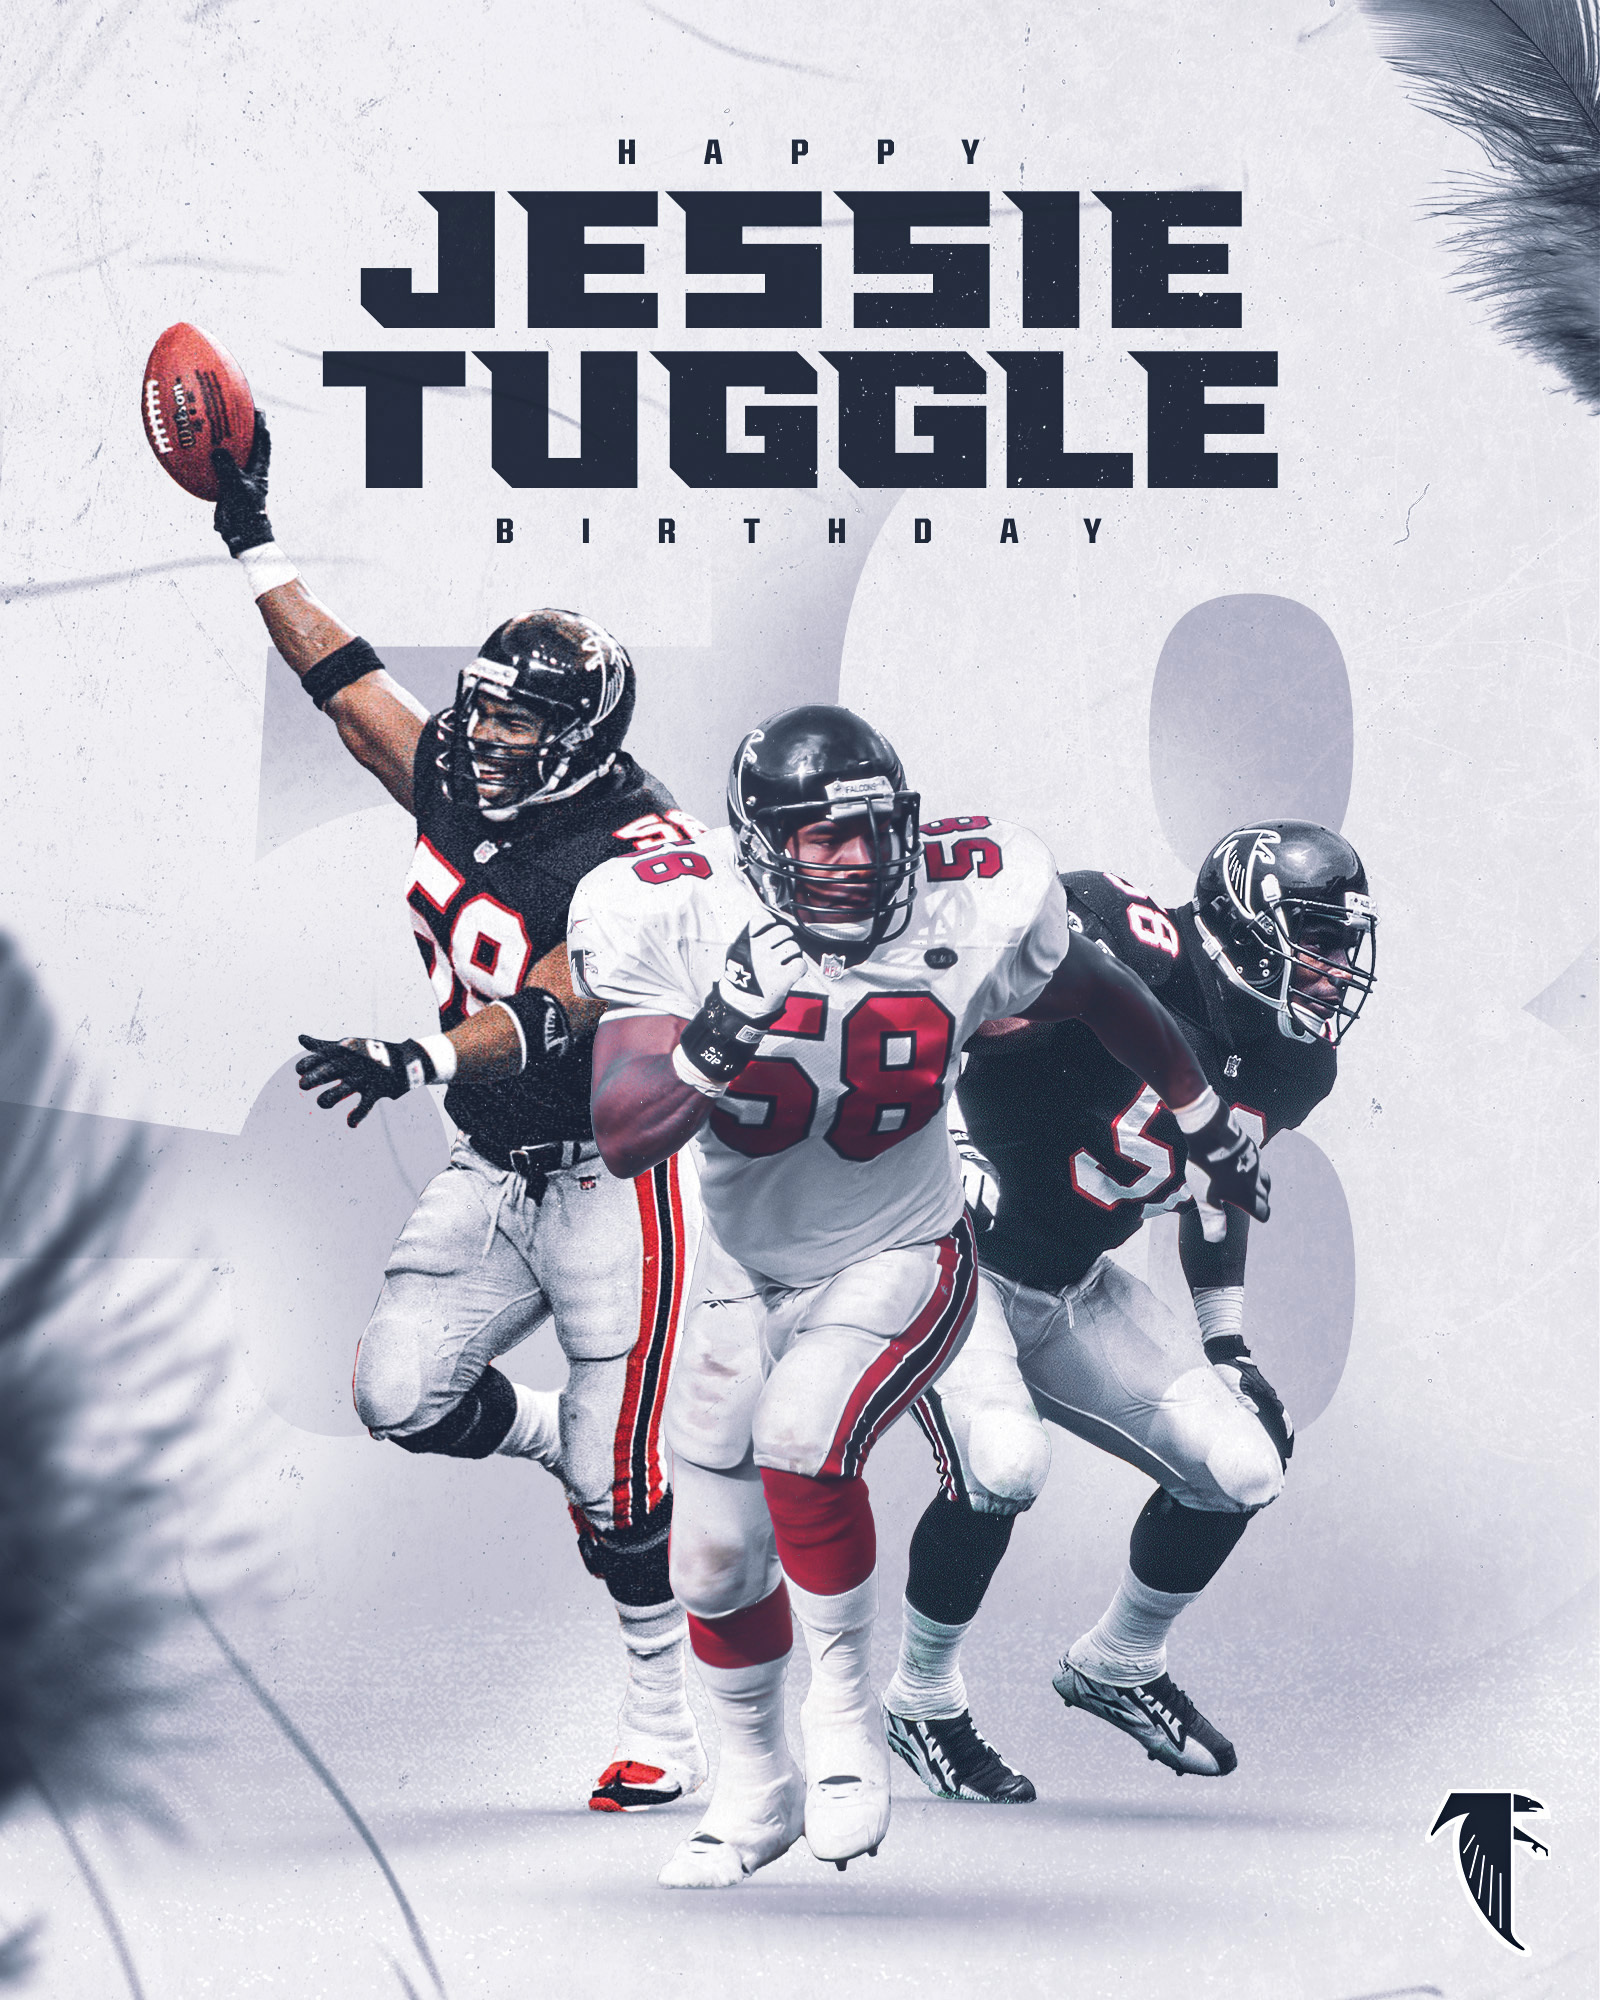 Atlanta Falcons on X: RT to wish the legendary Jessie Tuggle a